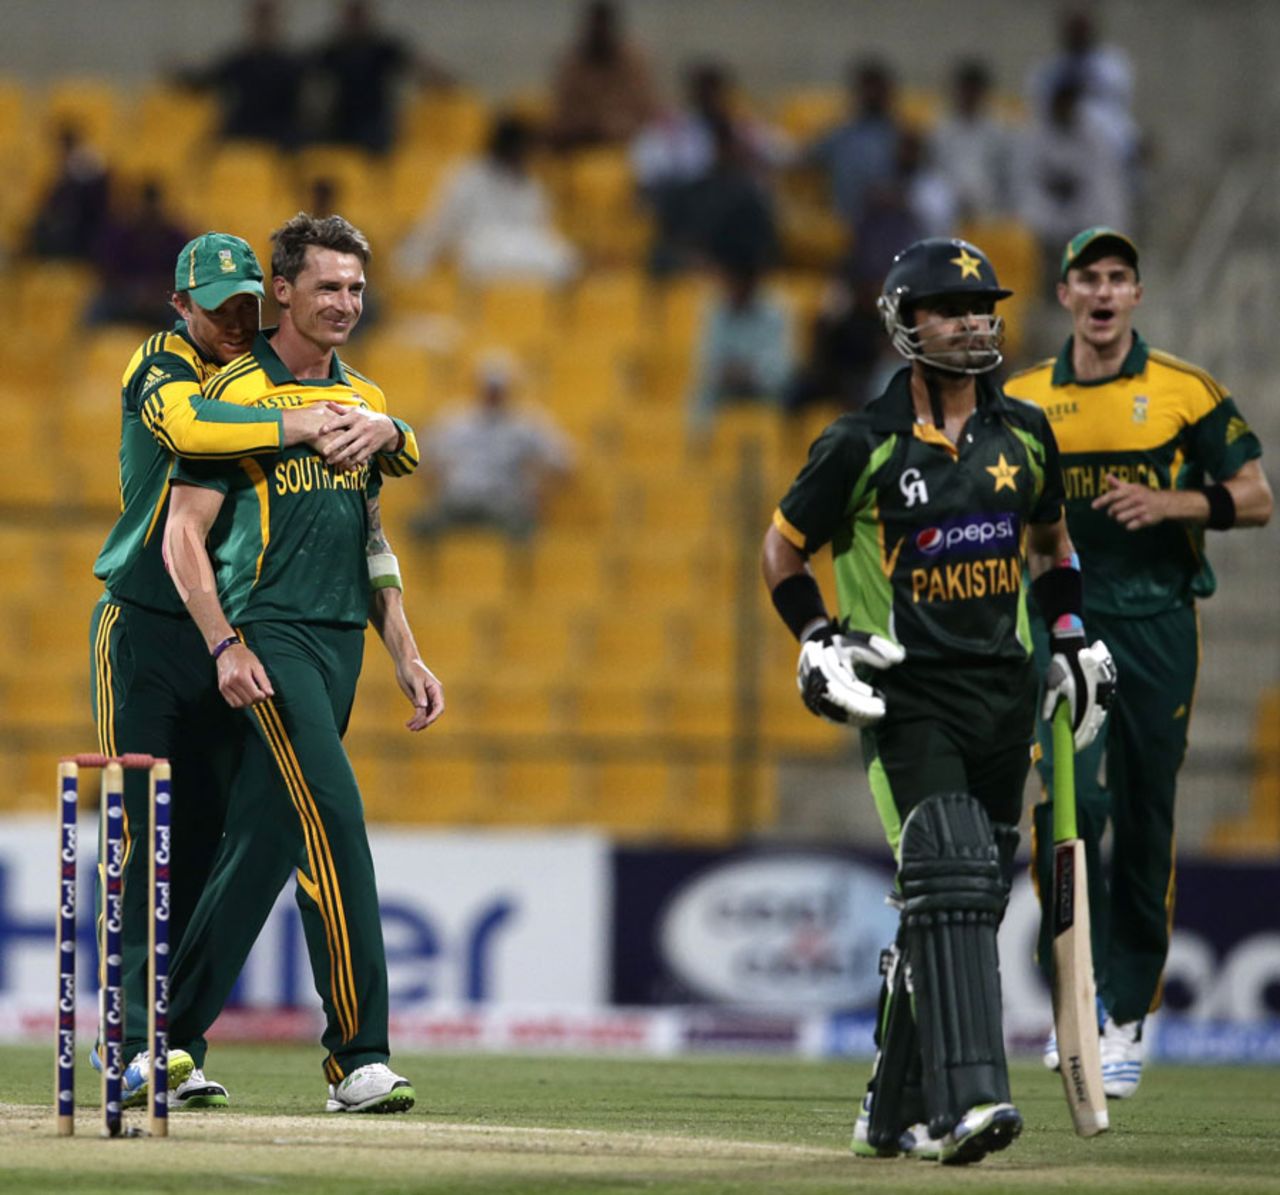 Dale Steyn dismissed Ahmed Shehzad for 32, Pakistan v South Africa, 3rd ODI, Abu Dhabi, November 6, 2013